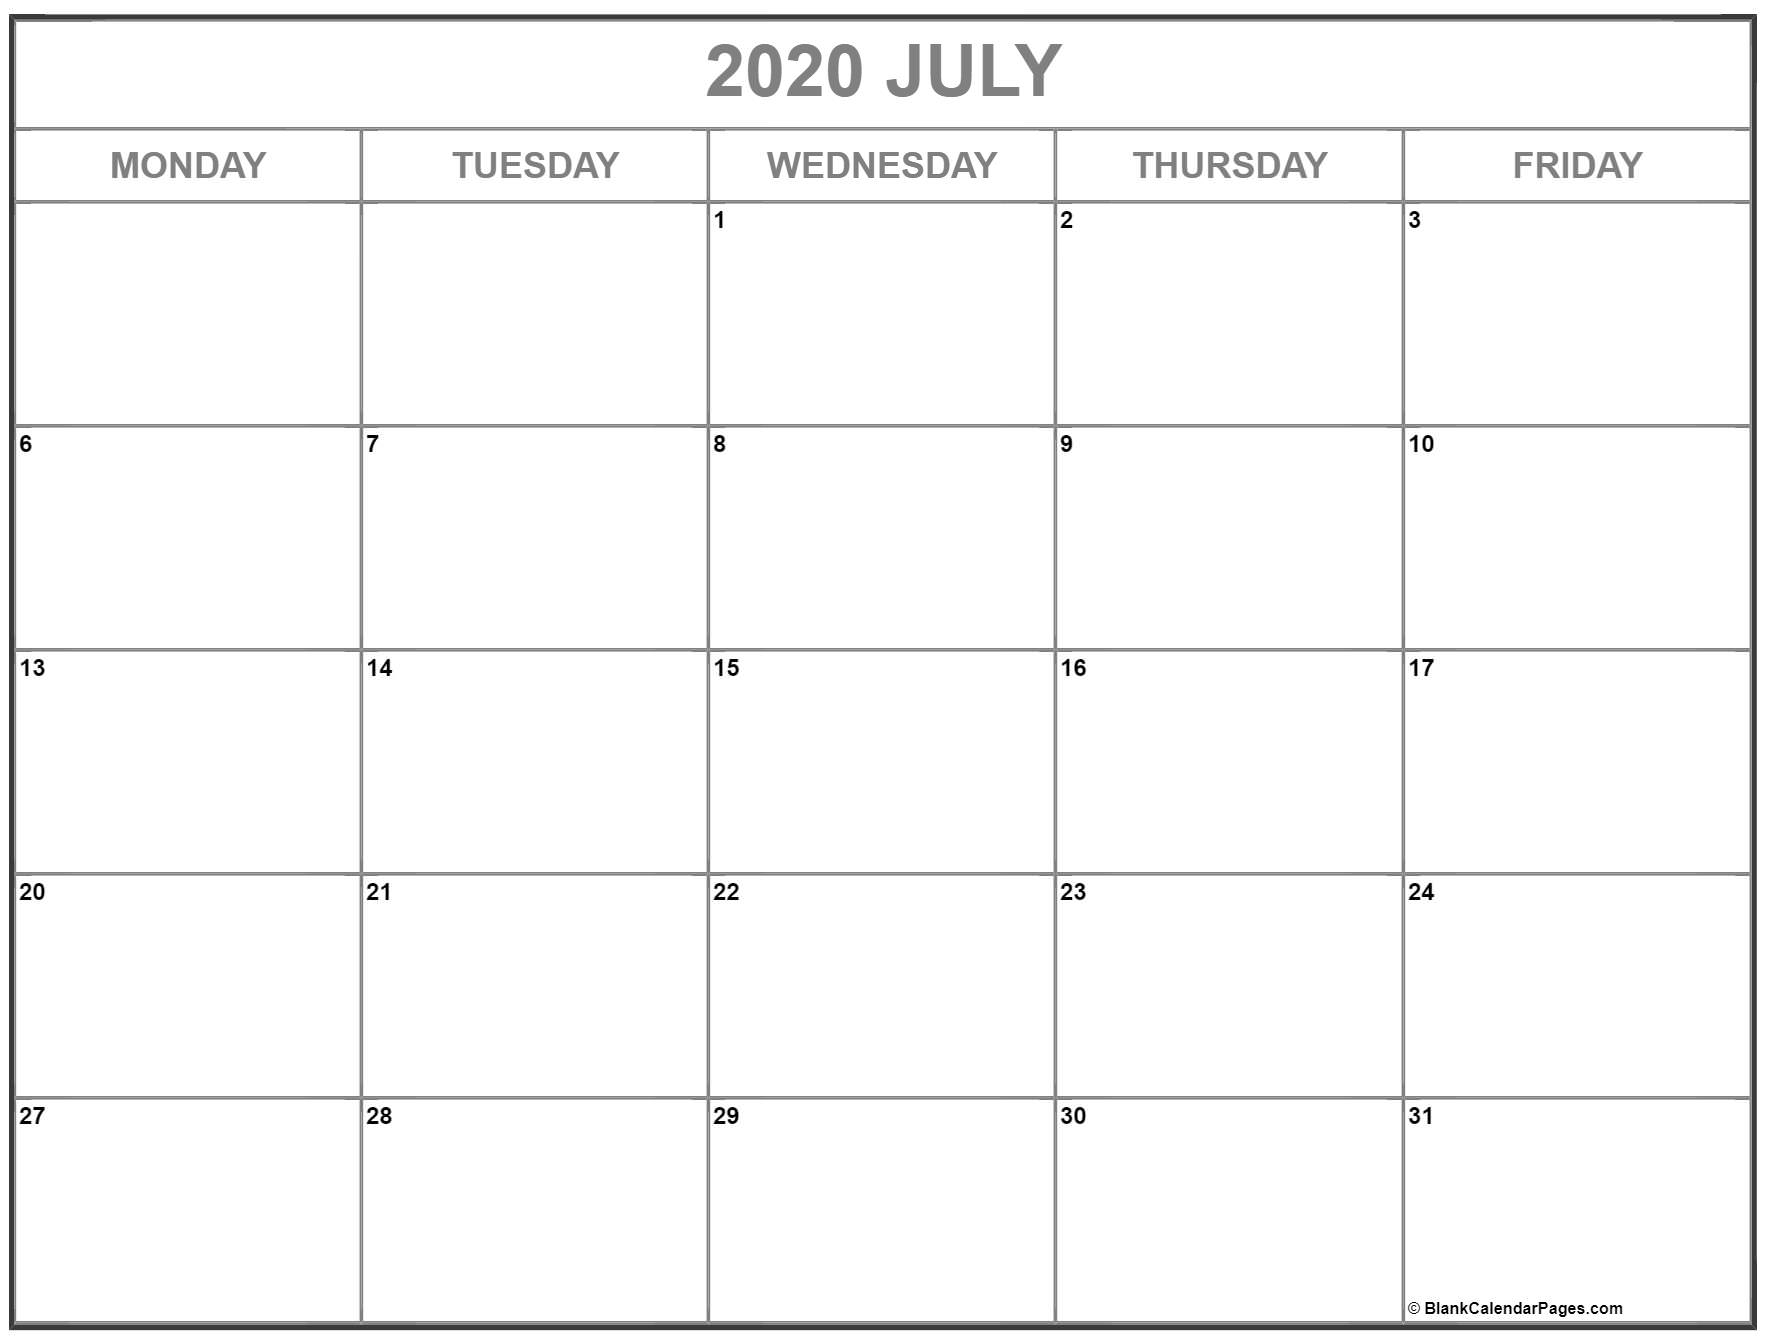 July 2020 Monday Calendar | Monday To Sunday with Monday To Sunday Calendar